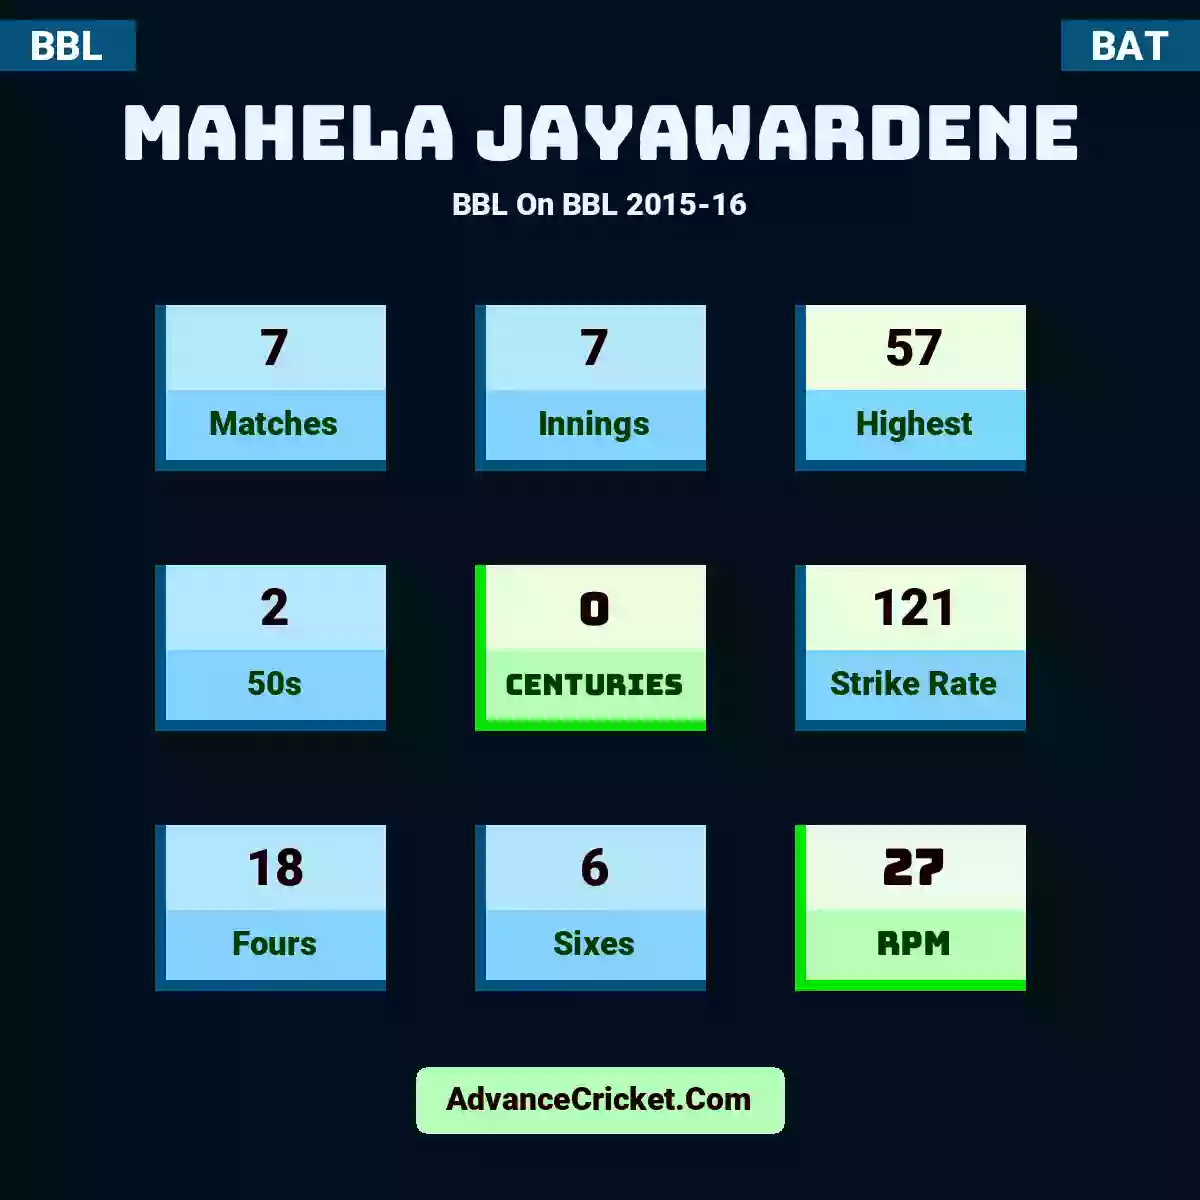 Mahela Jayawardene BBL  On BBL 2015-16, Mahela Jayawardene played 7 matches, scored 57 runs as highest, 2 half-centuries, and 0 centuries, with a strike rate of 121. M.Jayawardene hit 18 fours and 6 sixes, with an RPM of 27.